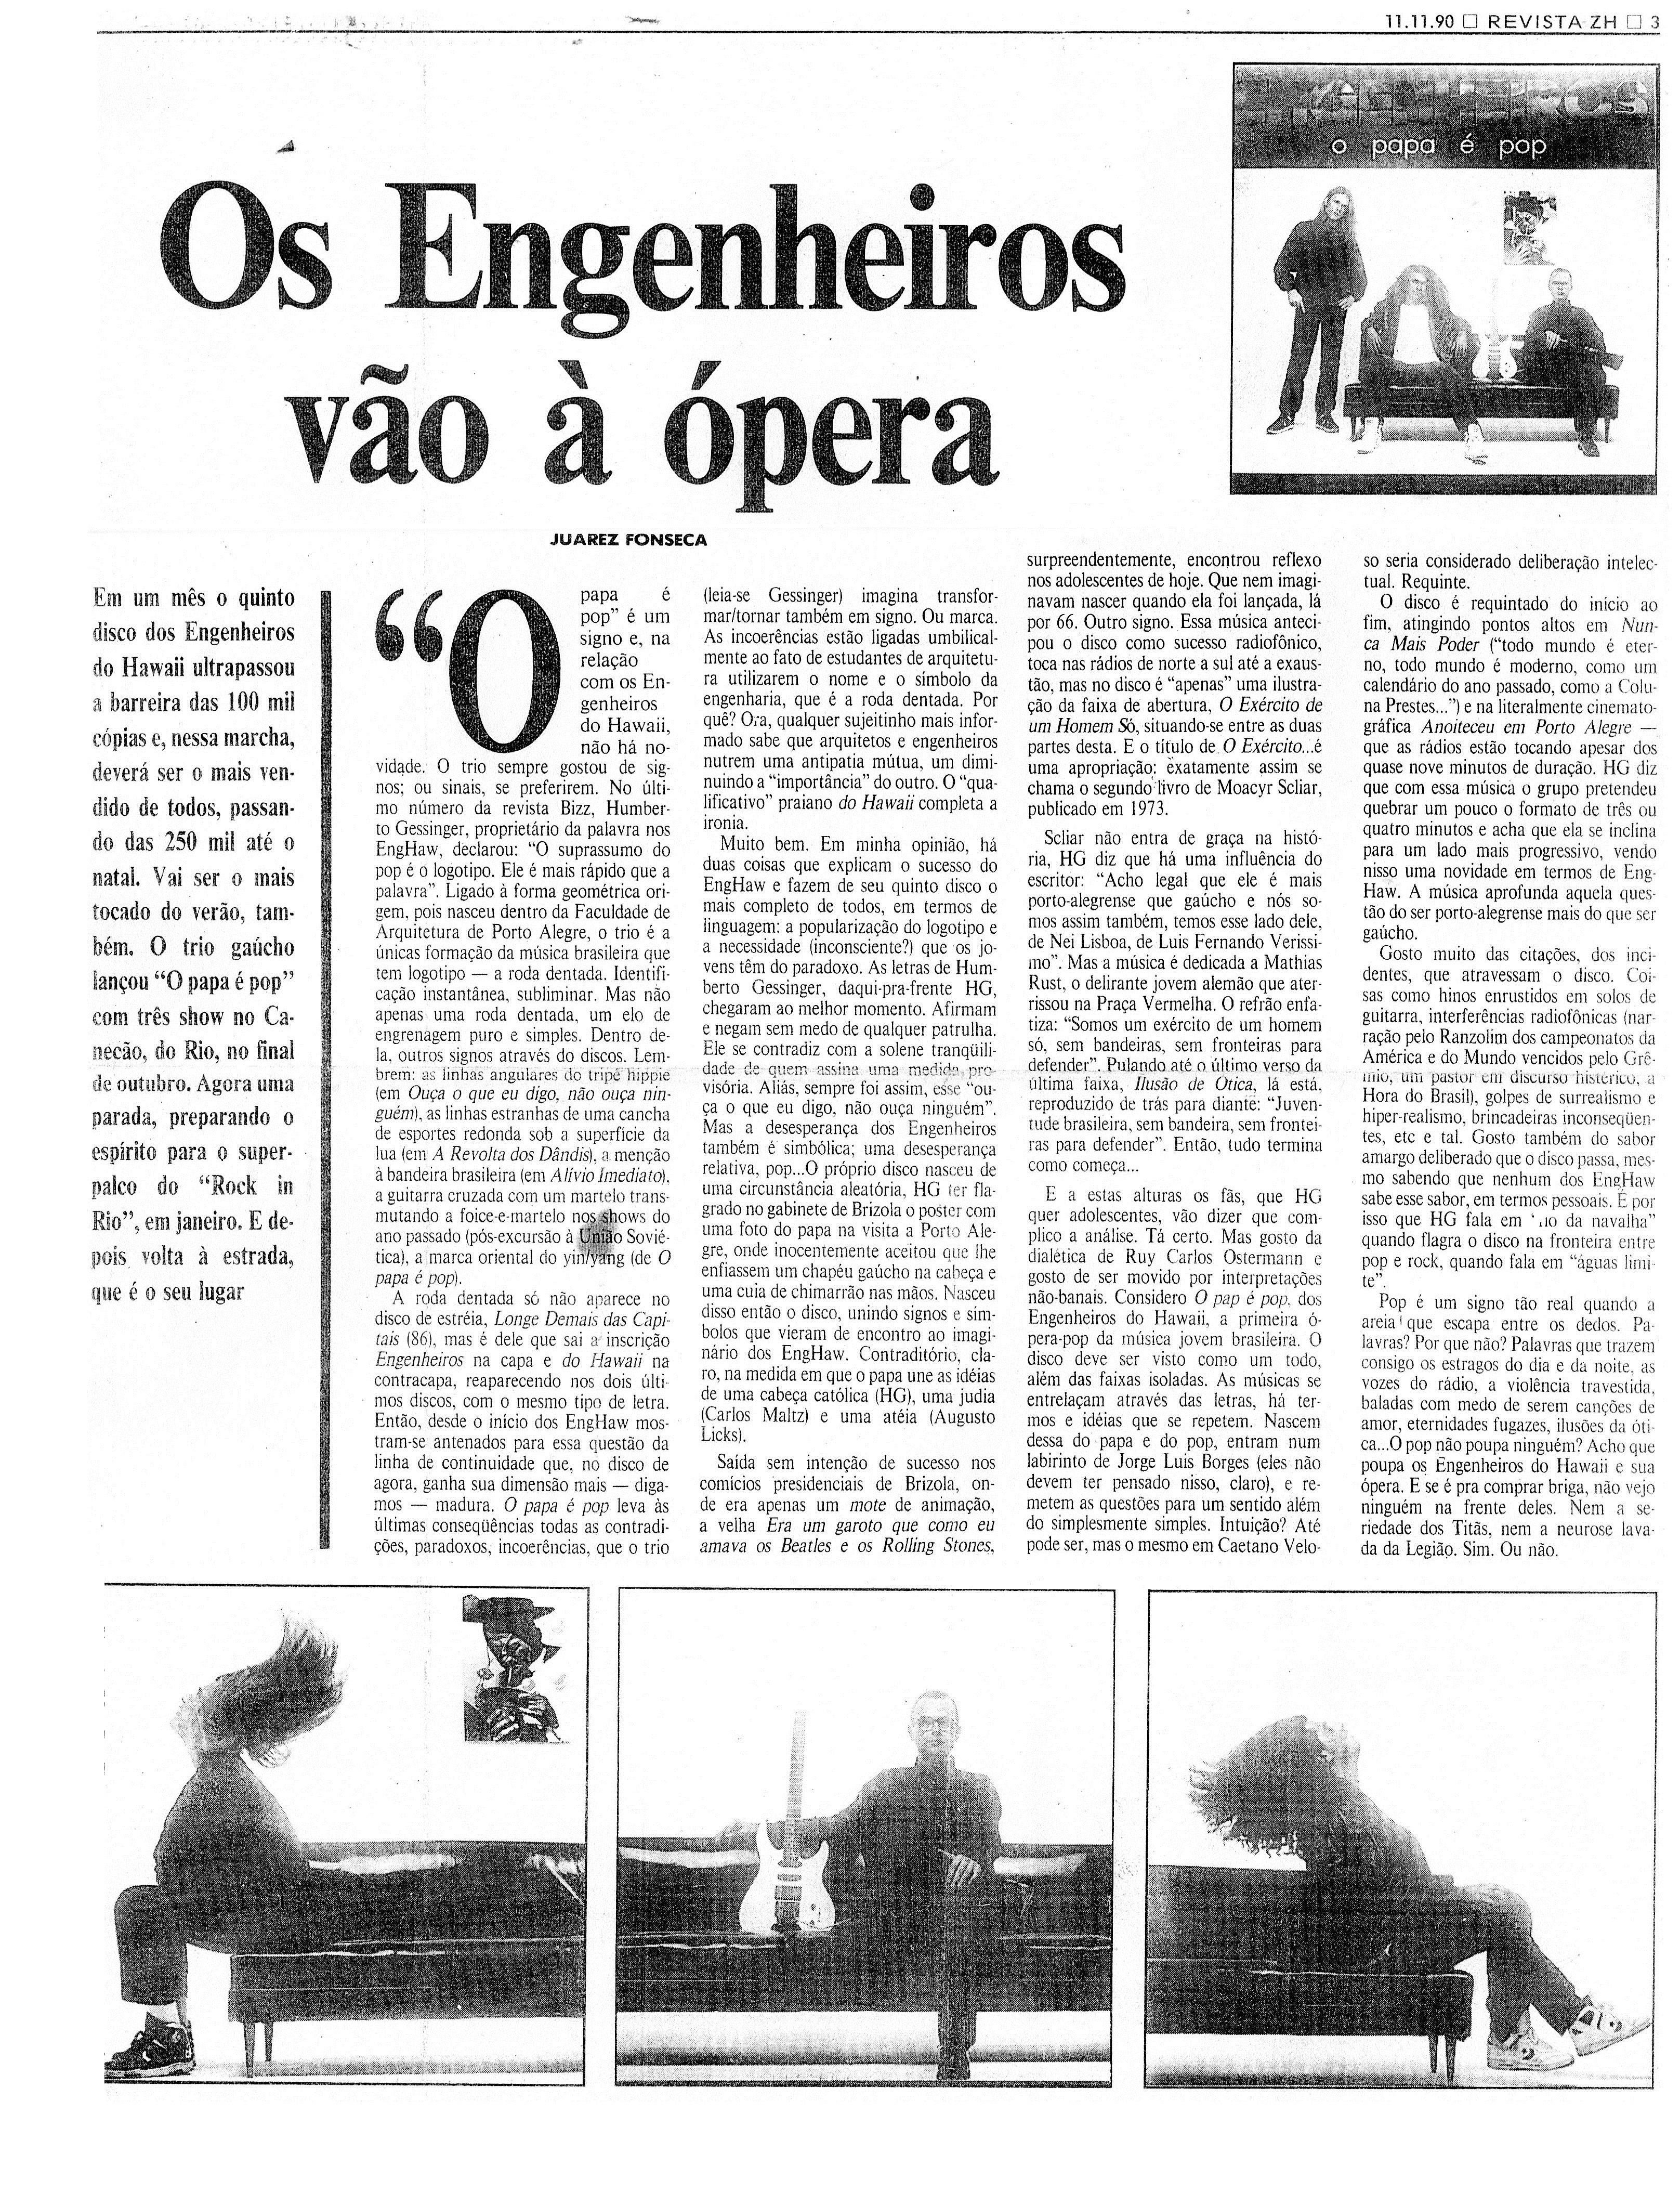 1990-os-engenheiros-vao-a-opera